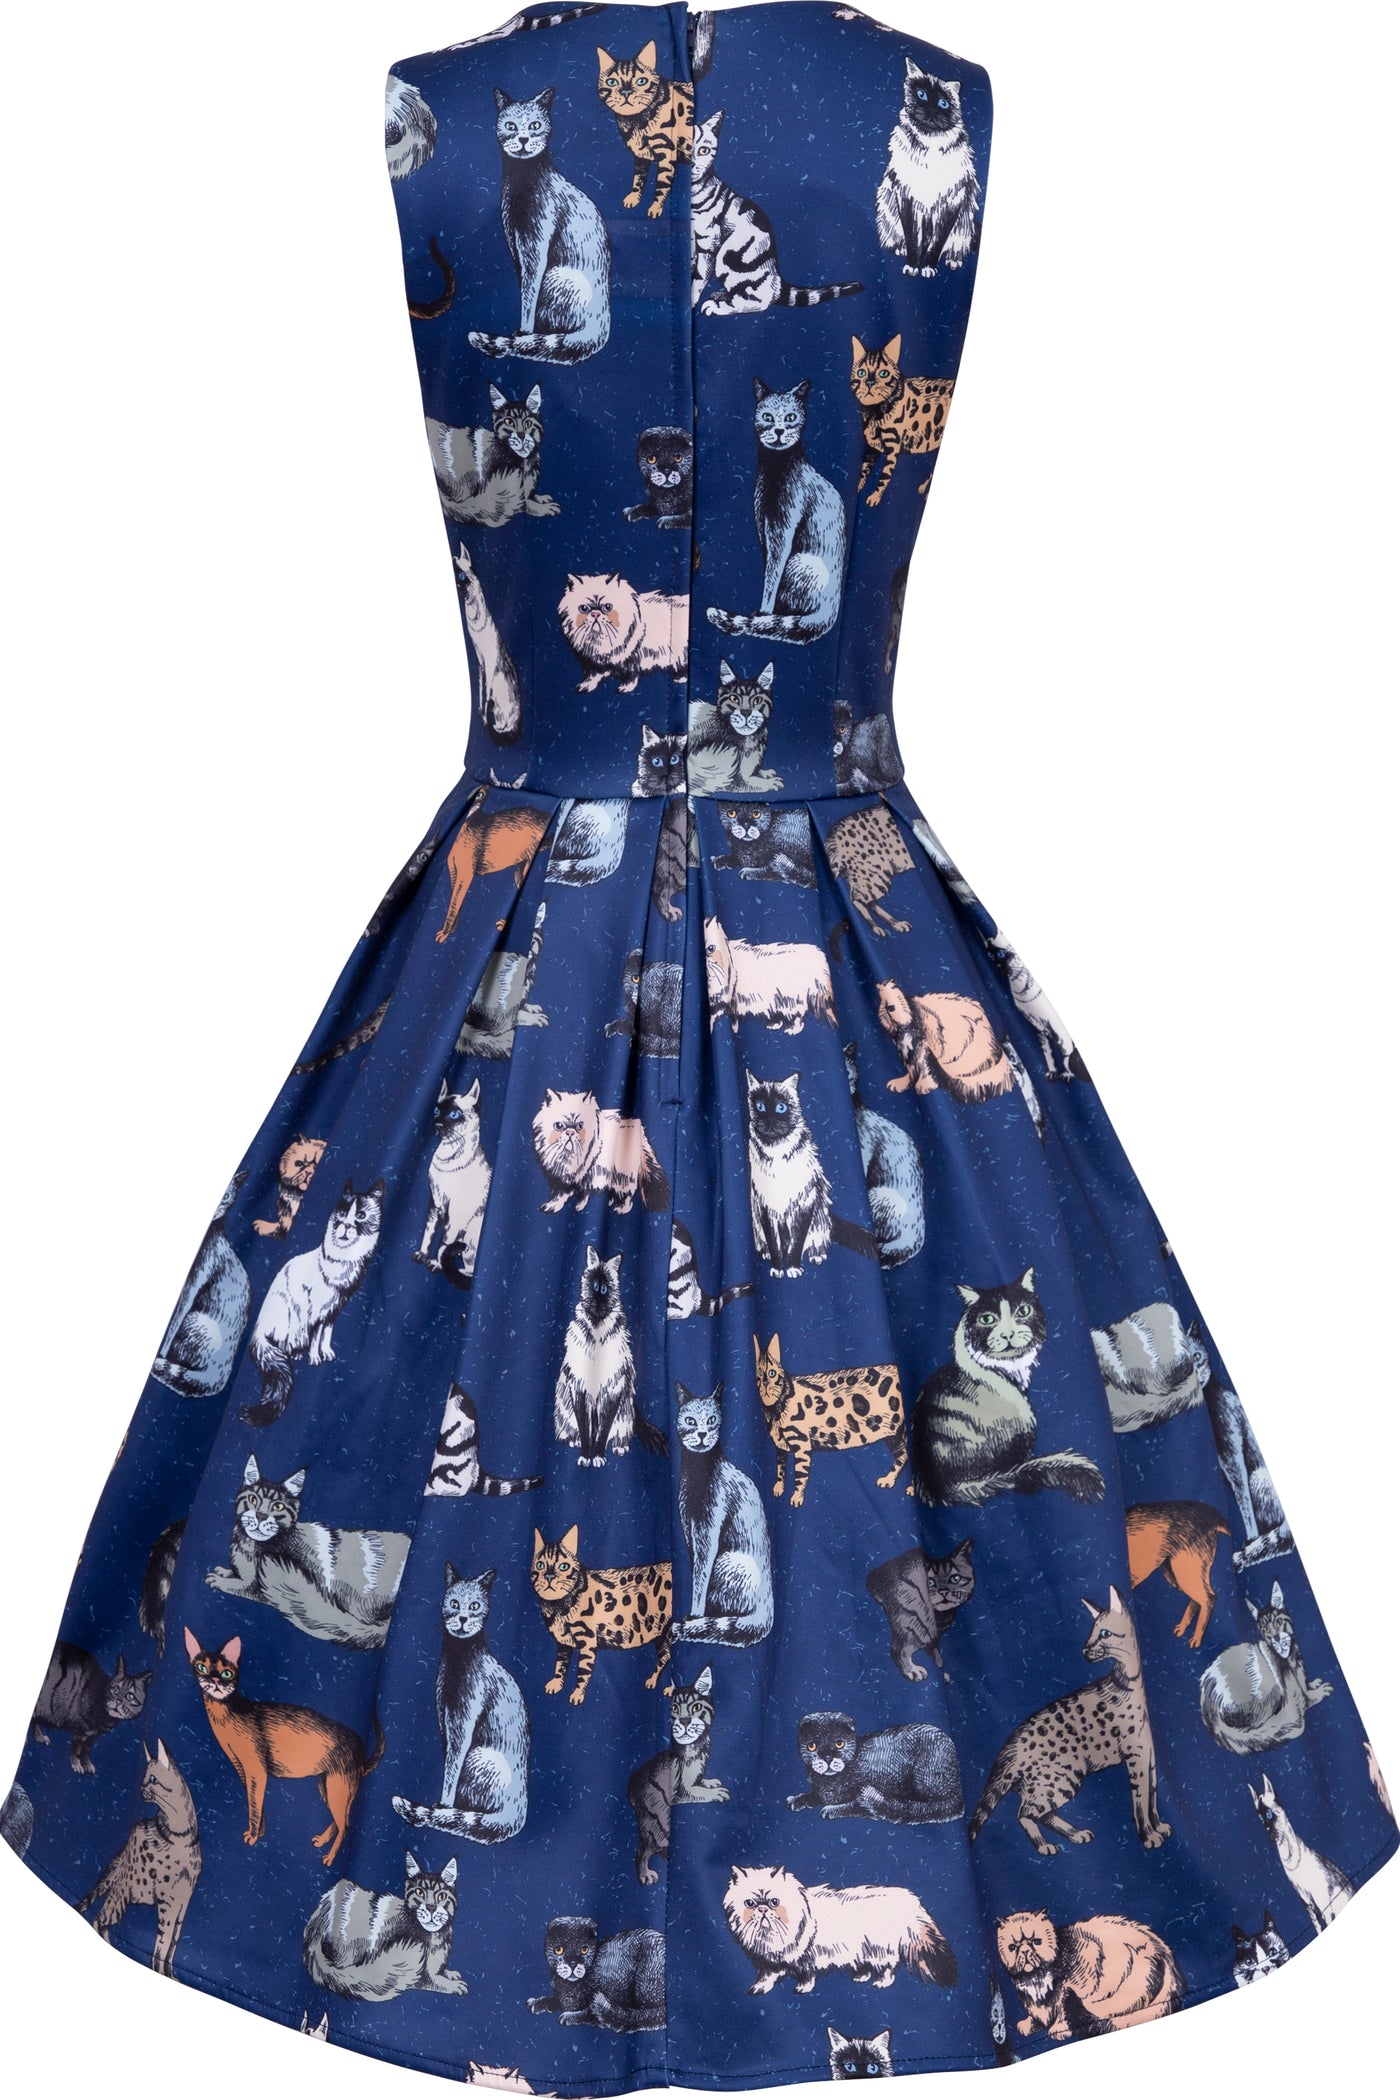  Retro Blue Cat Swing Dress